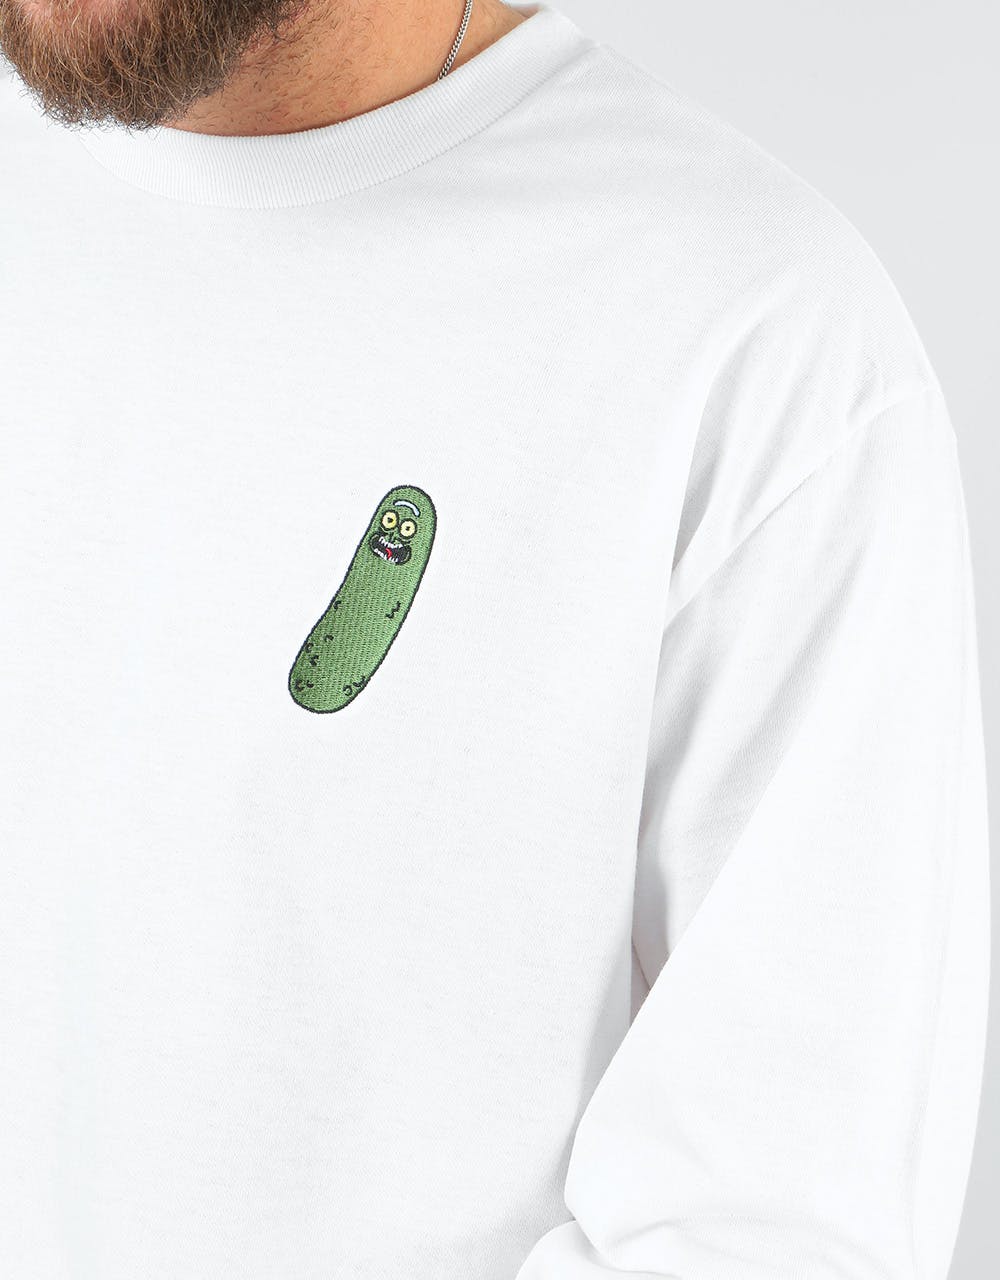 Primitive x Rick & Morty Pickle Rick L/S T-Shirt - White